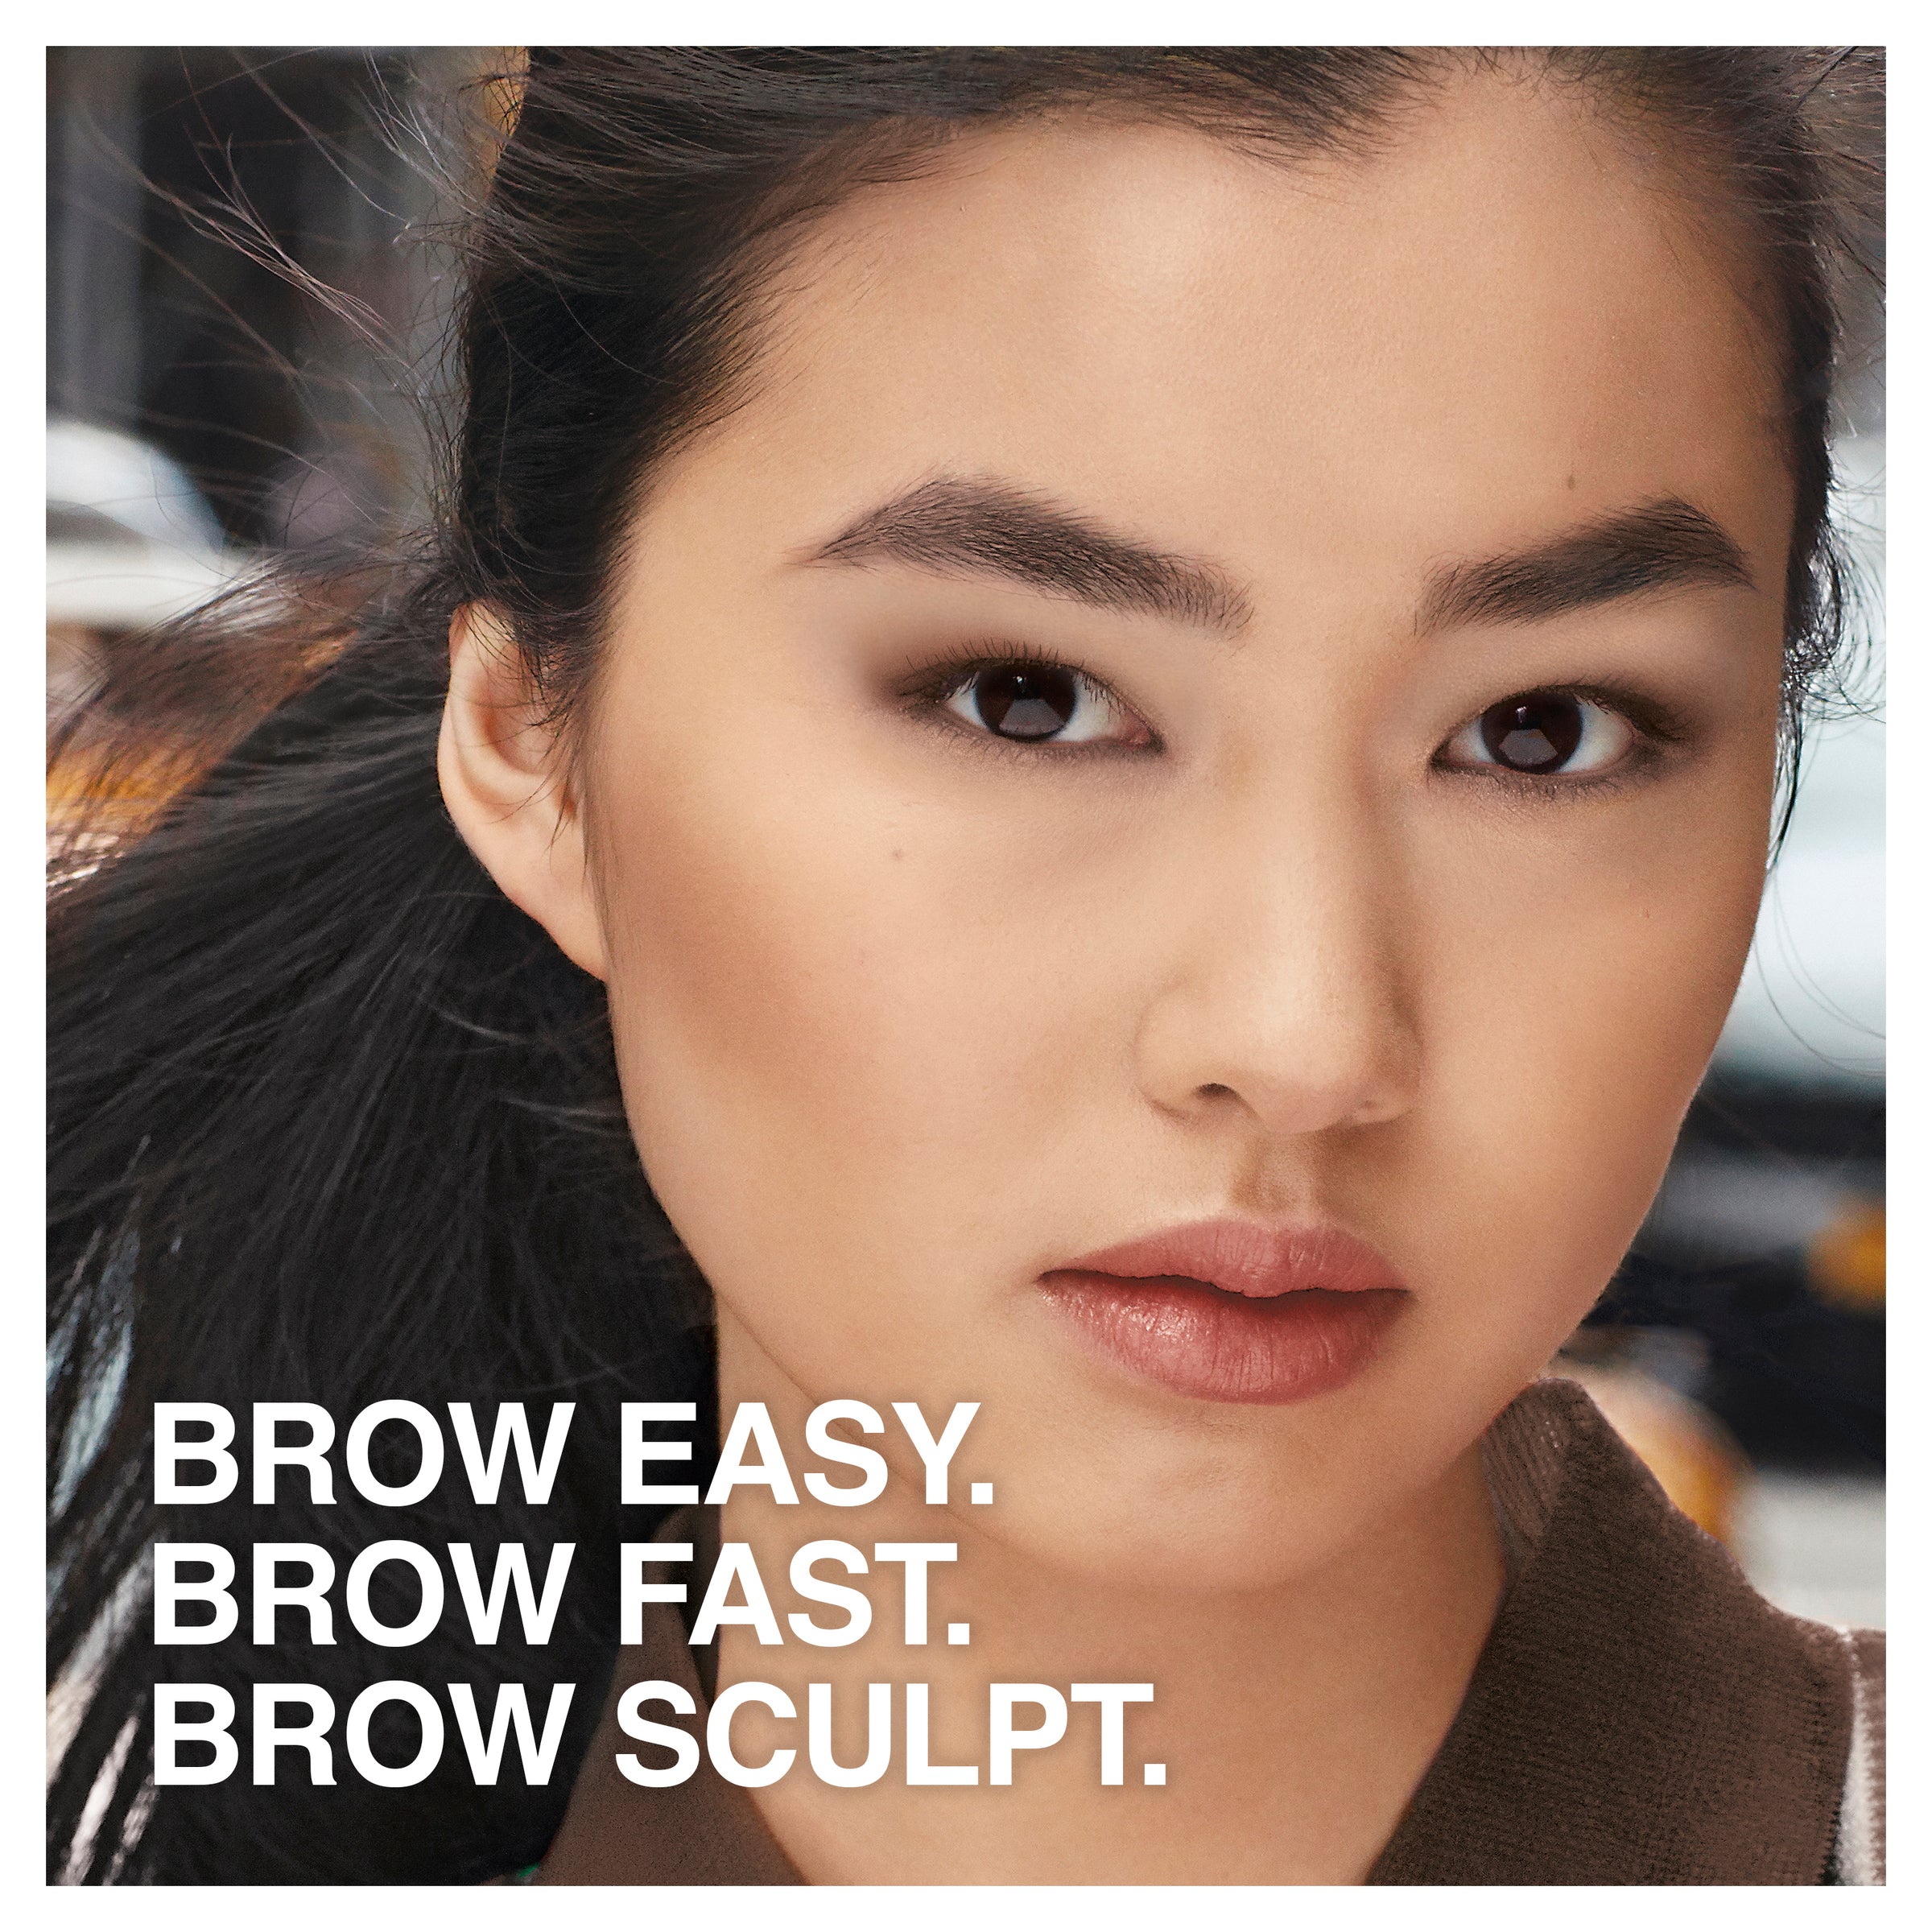 MAYBELLINE Brow Fast Sculpt Brow Gel Mascara - Medium Brown